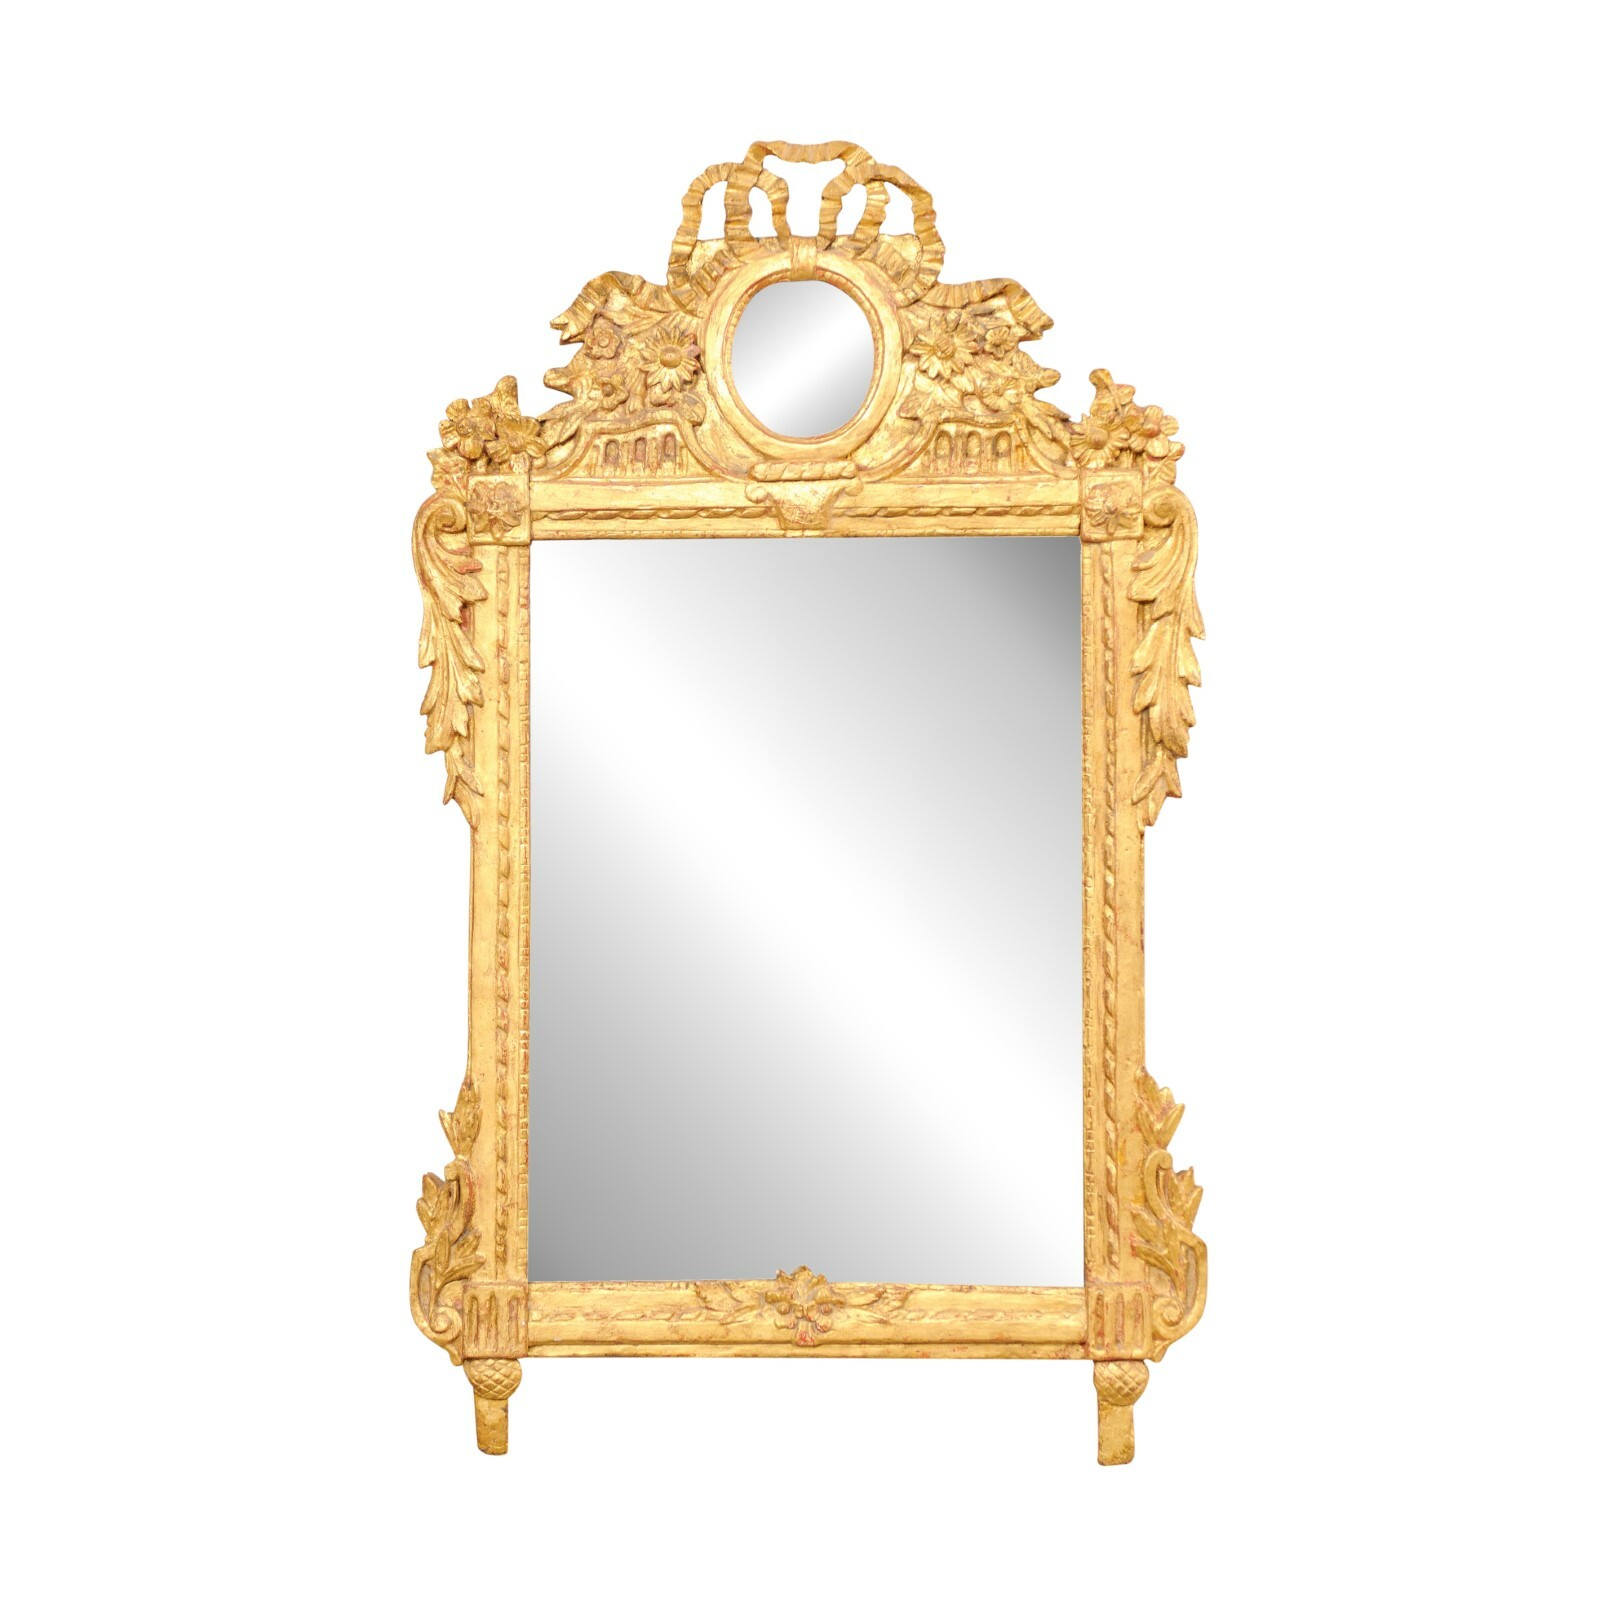 Neoclassic French Gilt Wood Mirror, 19th C.